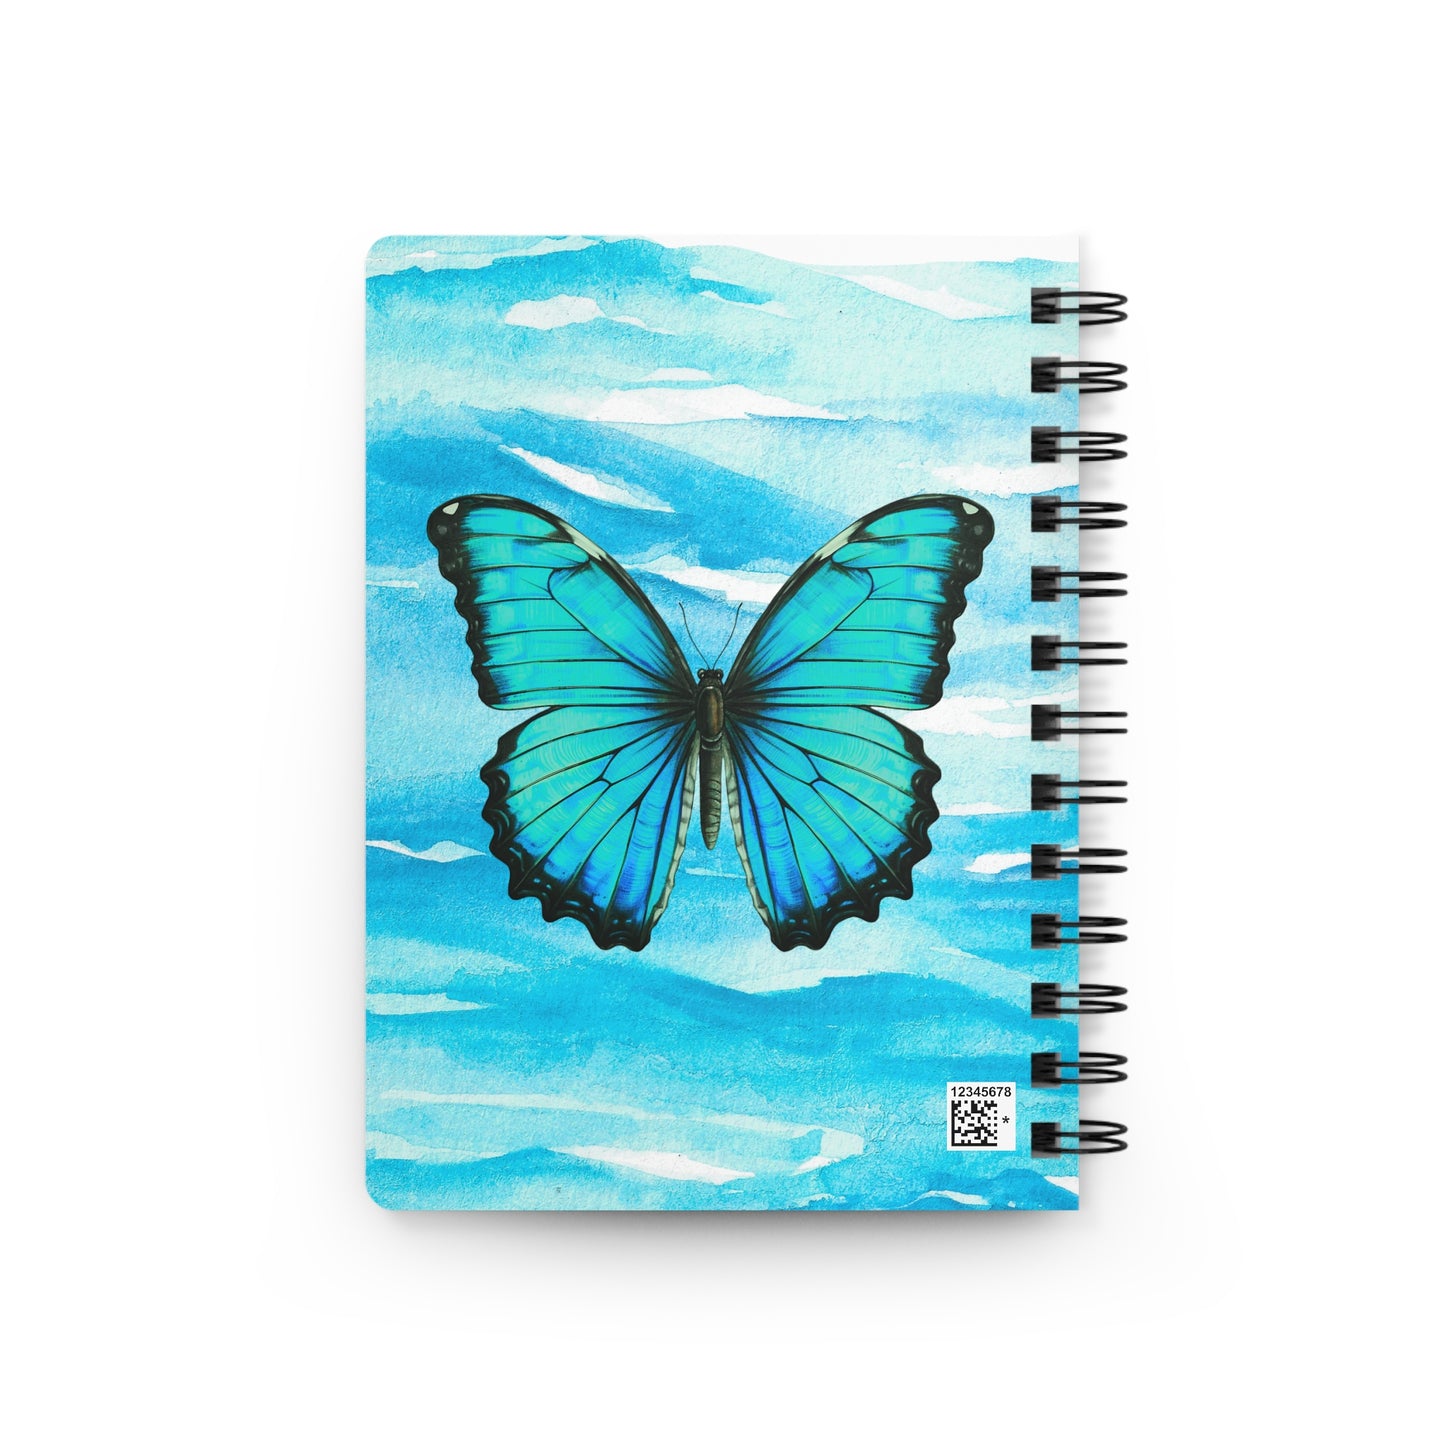 Butterfly Ocean Coastal Writing Sketch Inspiration Spiral Bound Journal